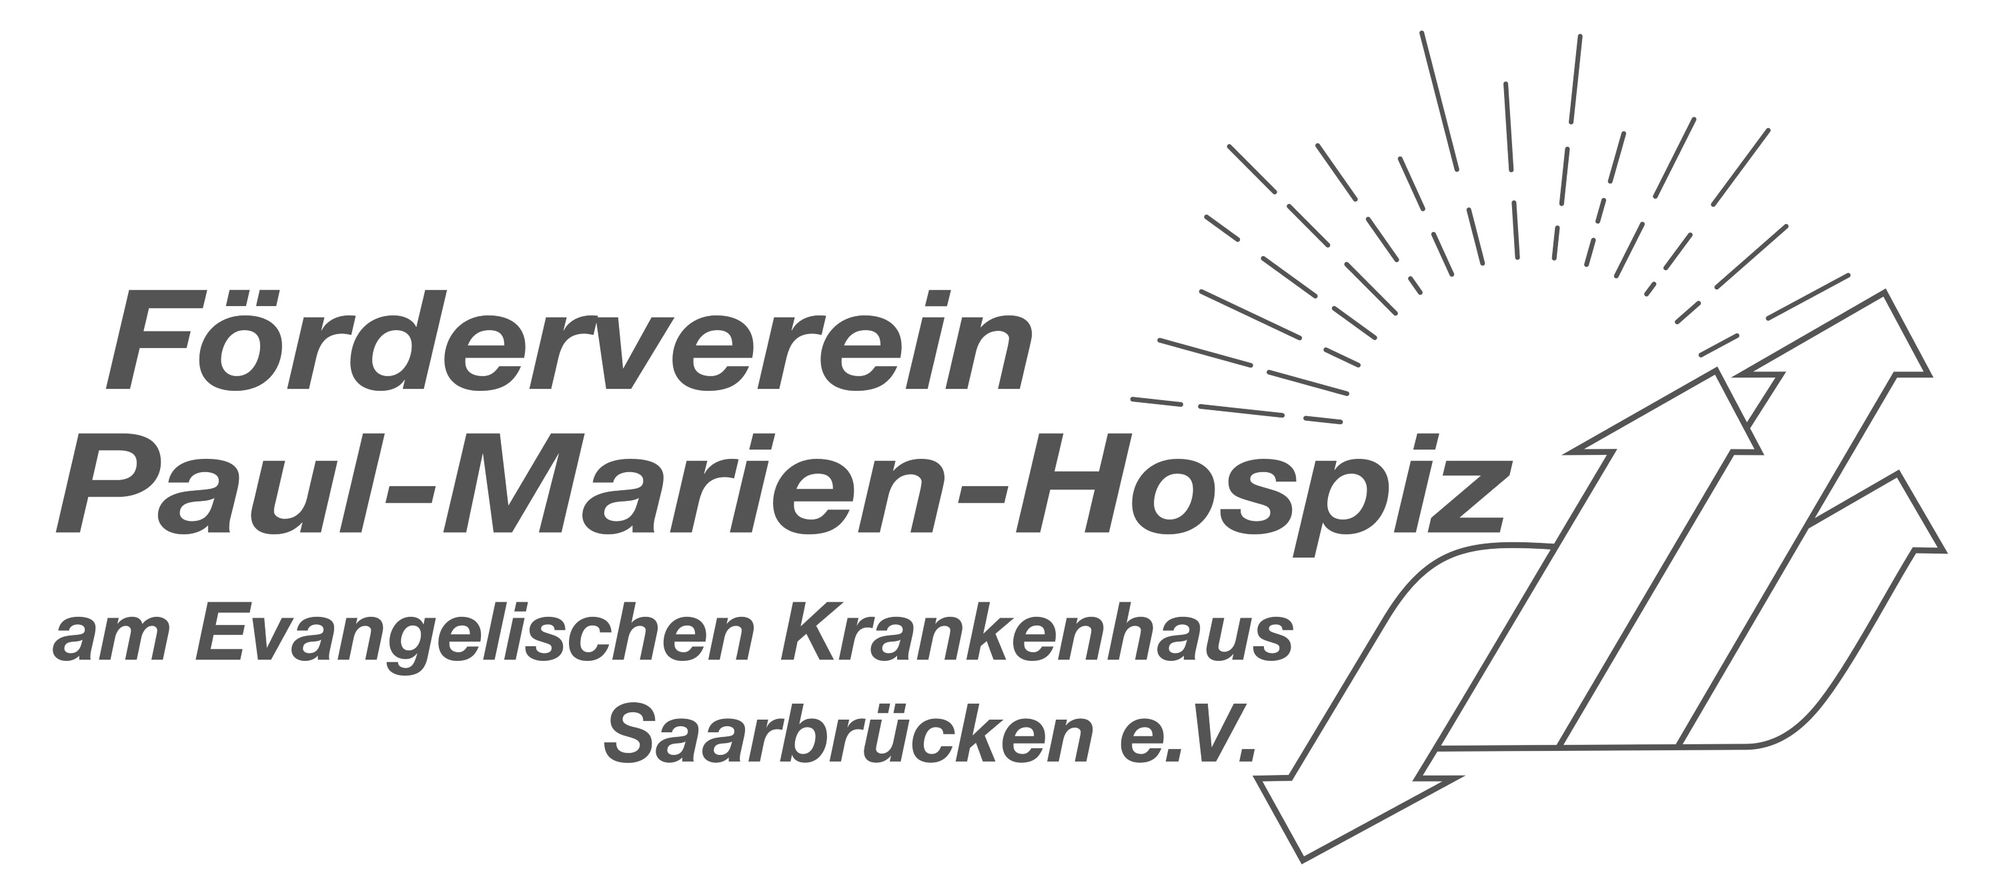 Förderverein Paul-Marien-Hospiz am Evangelischen Krankenhaus Saarbrücken e.V.